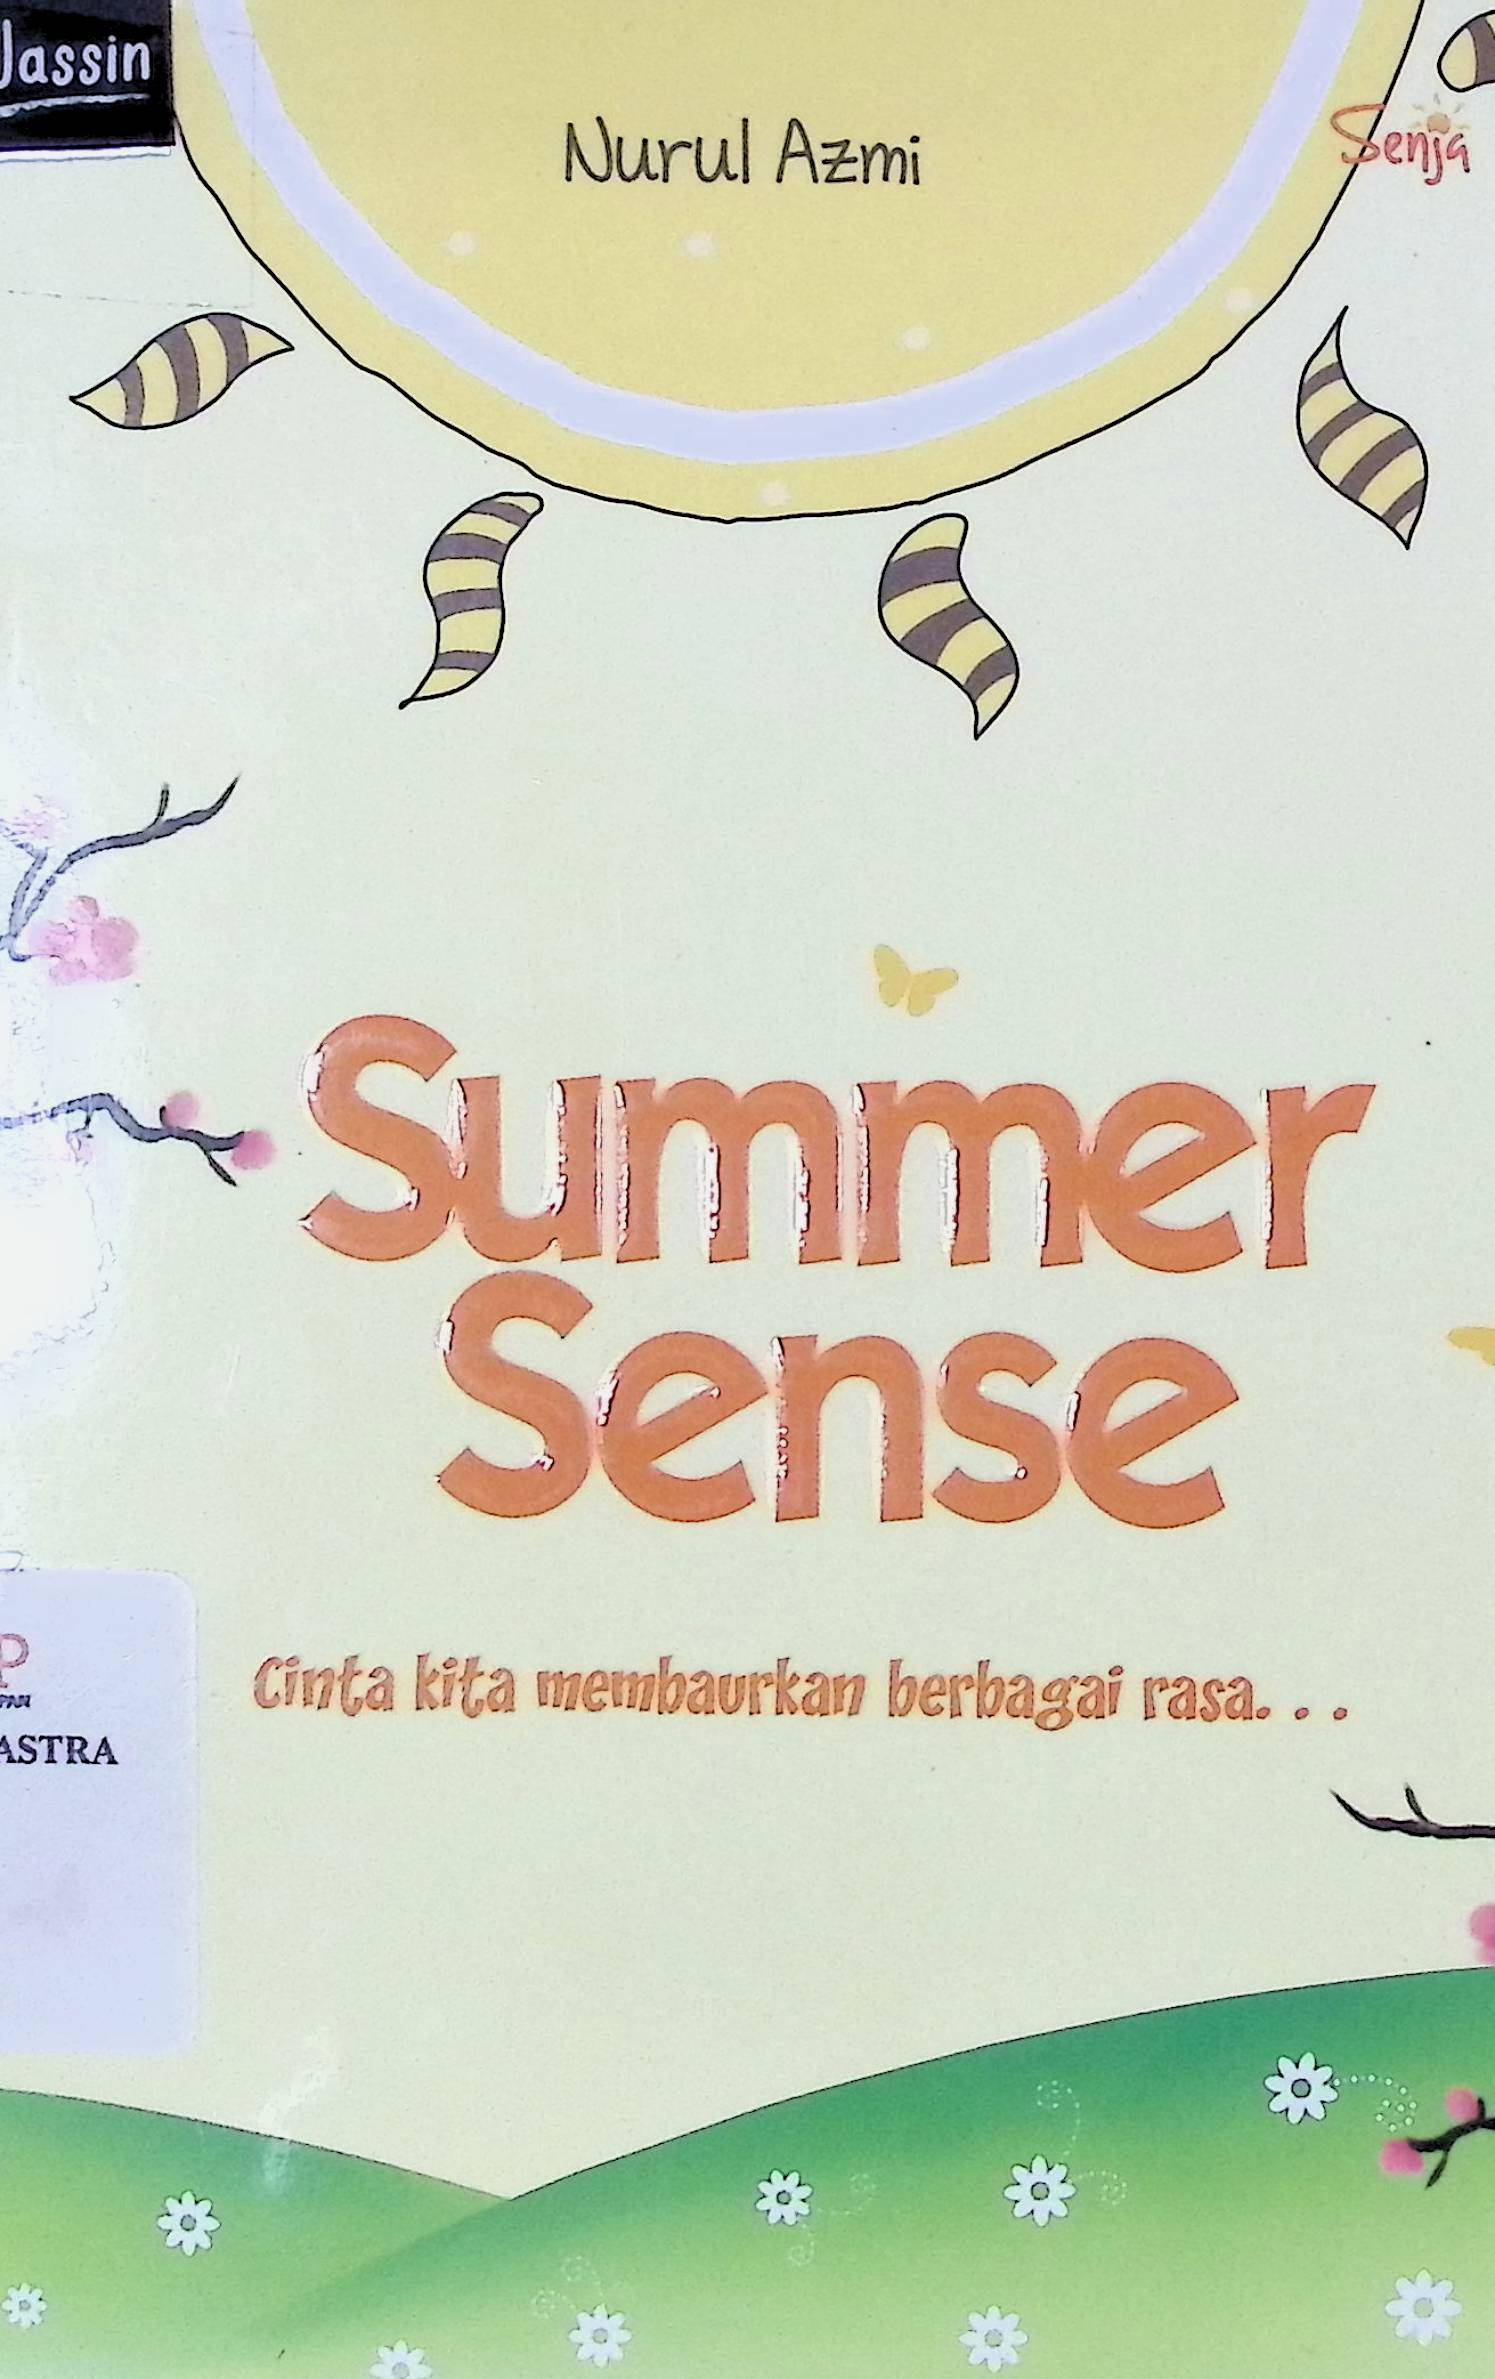 Summer sense :  cinta kita membaurkan berbagai rasa